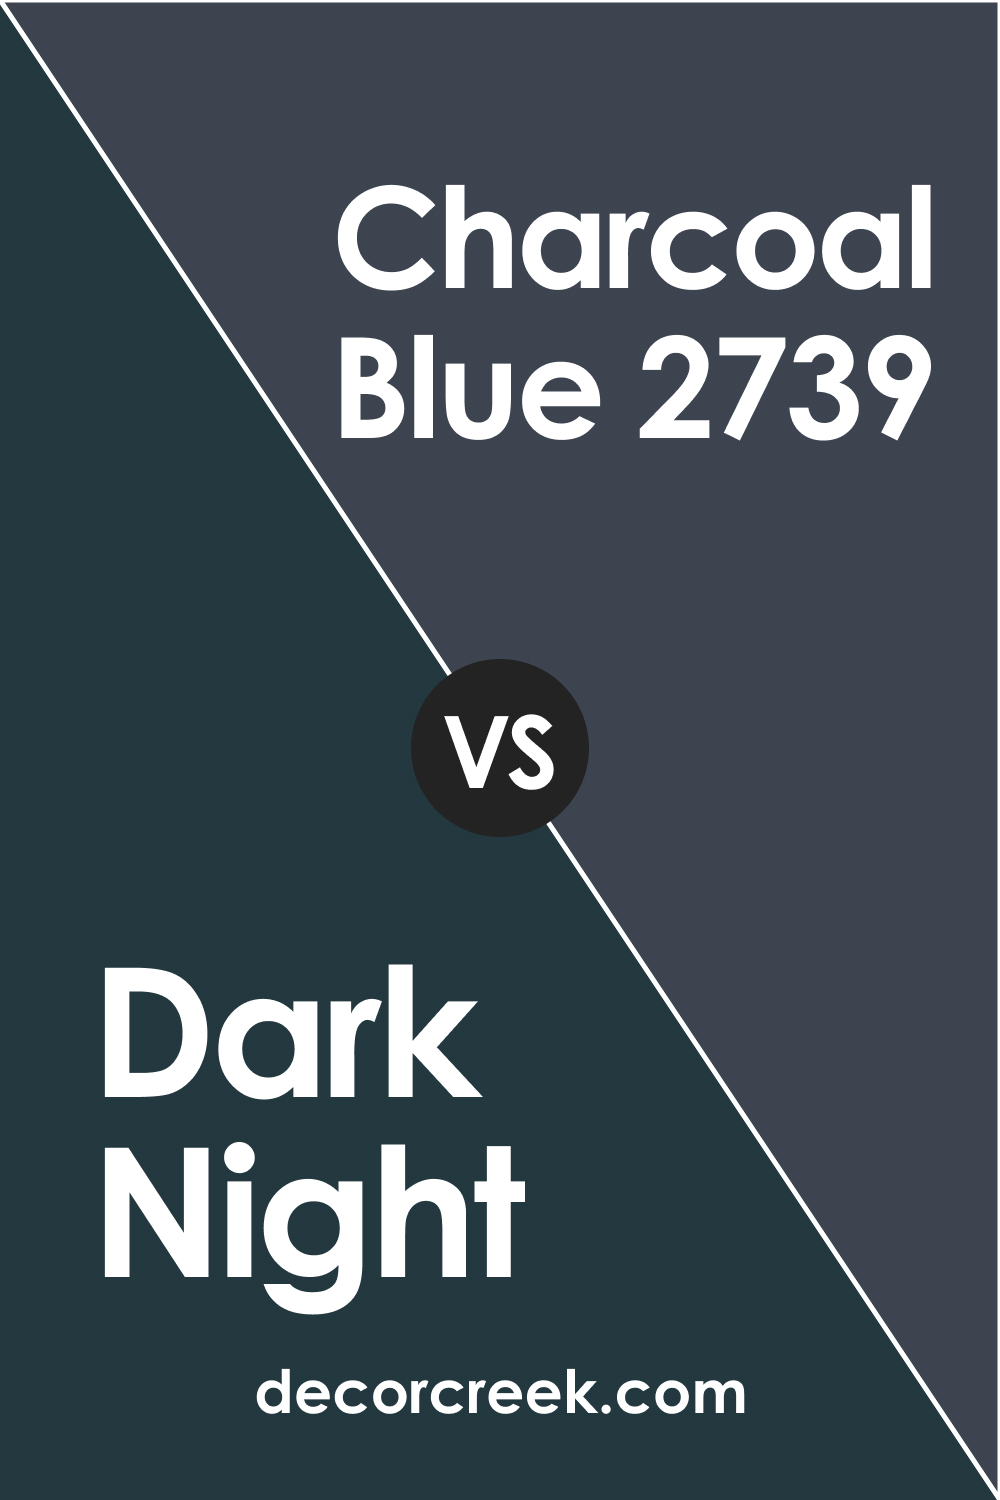 Dark Night vs Charcoal Blue